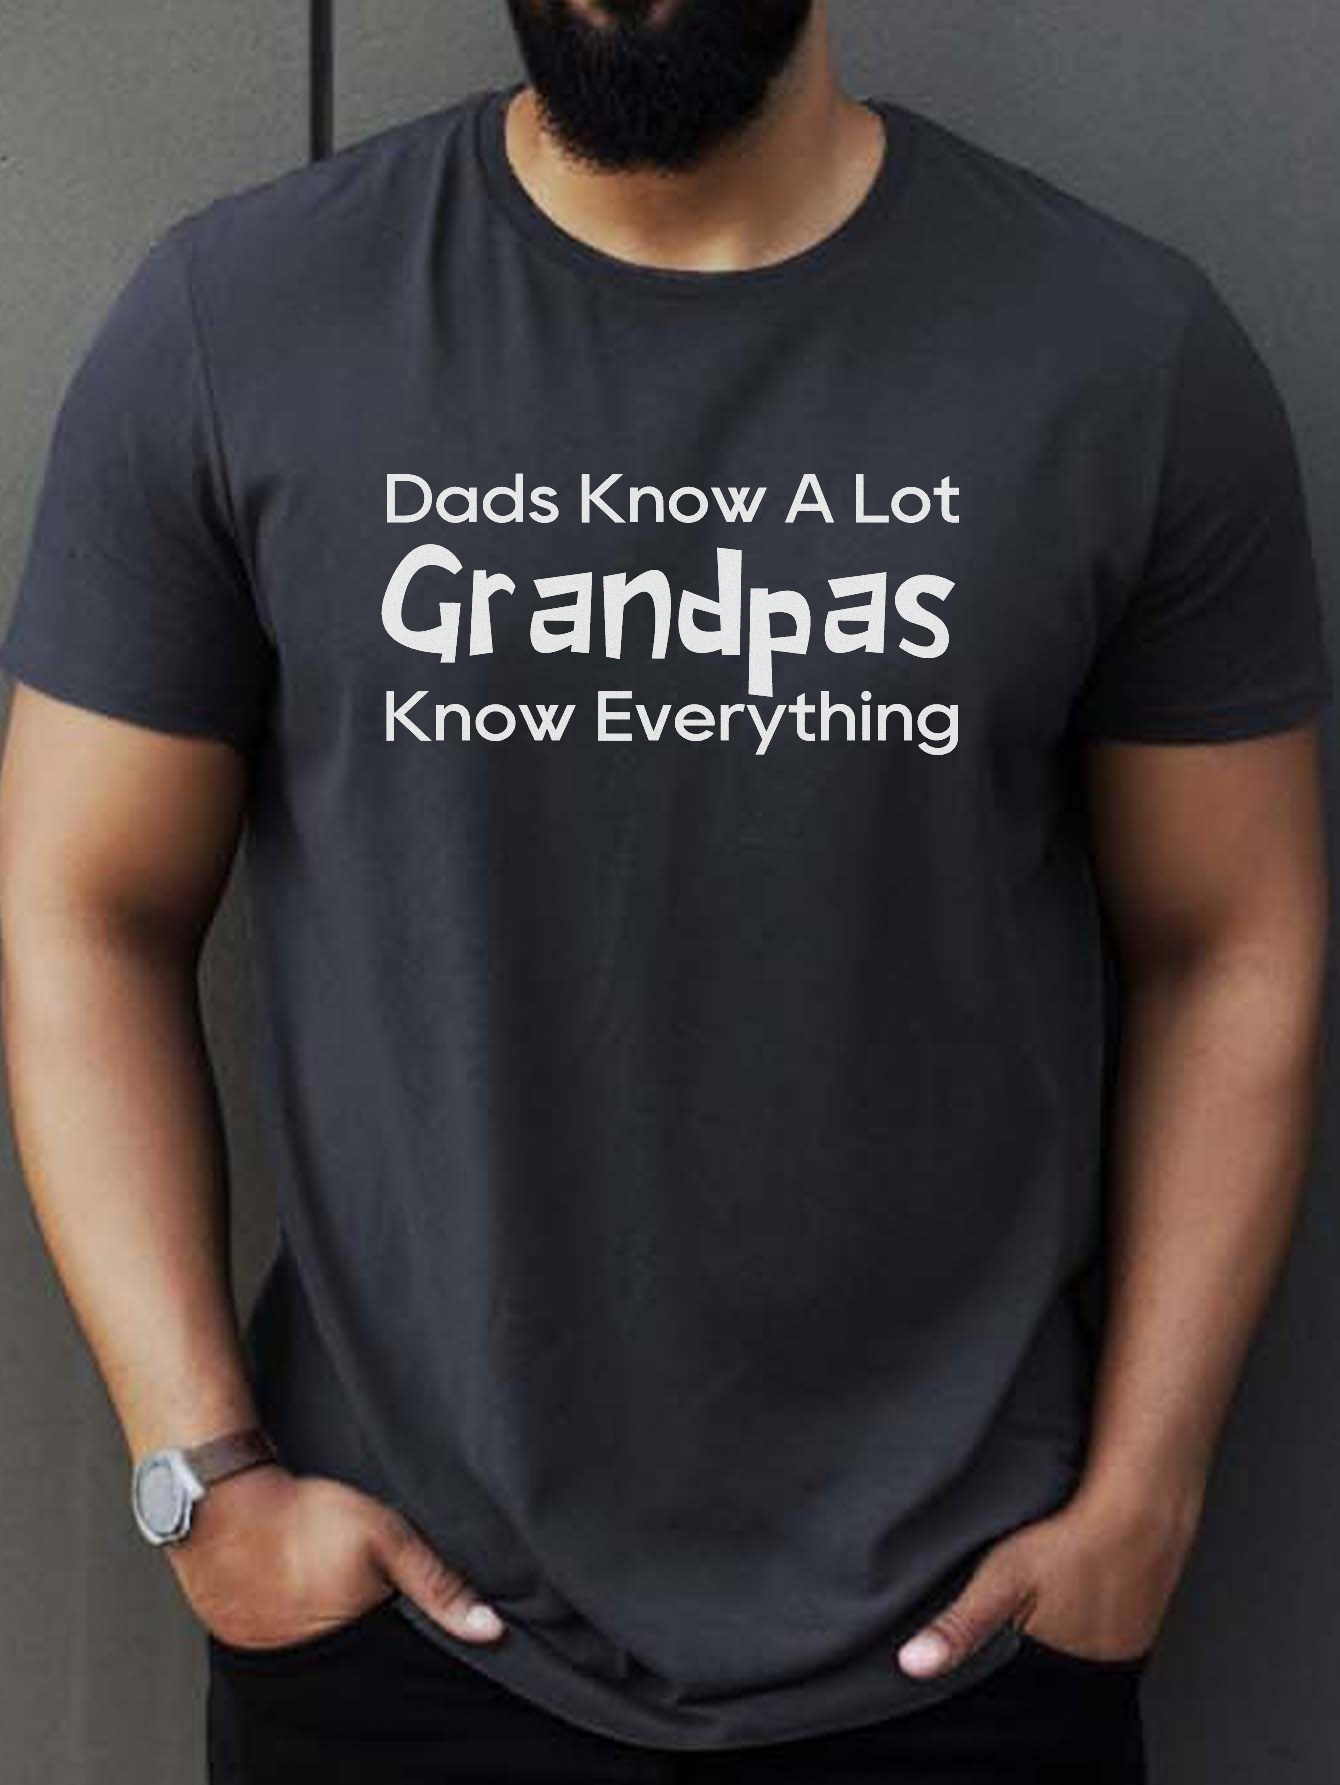 Camiseta Hombre manga corta - Abuelo